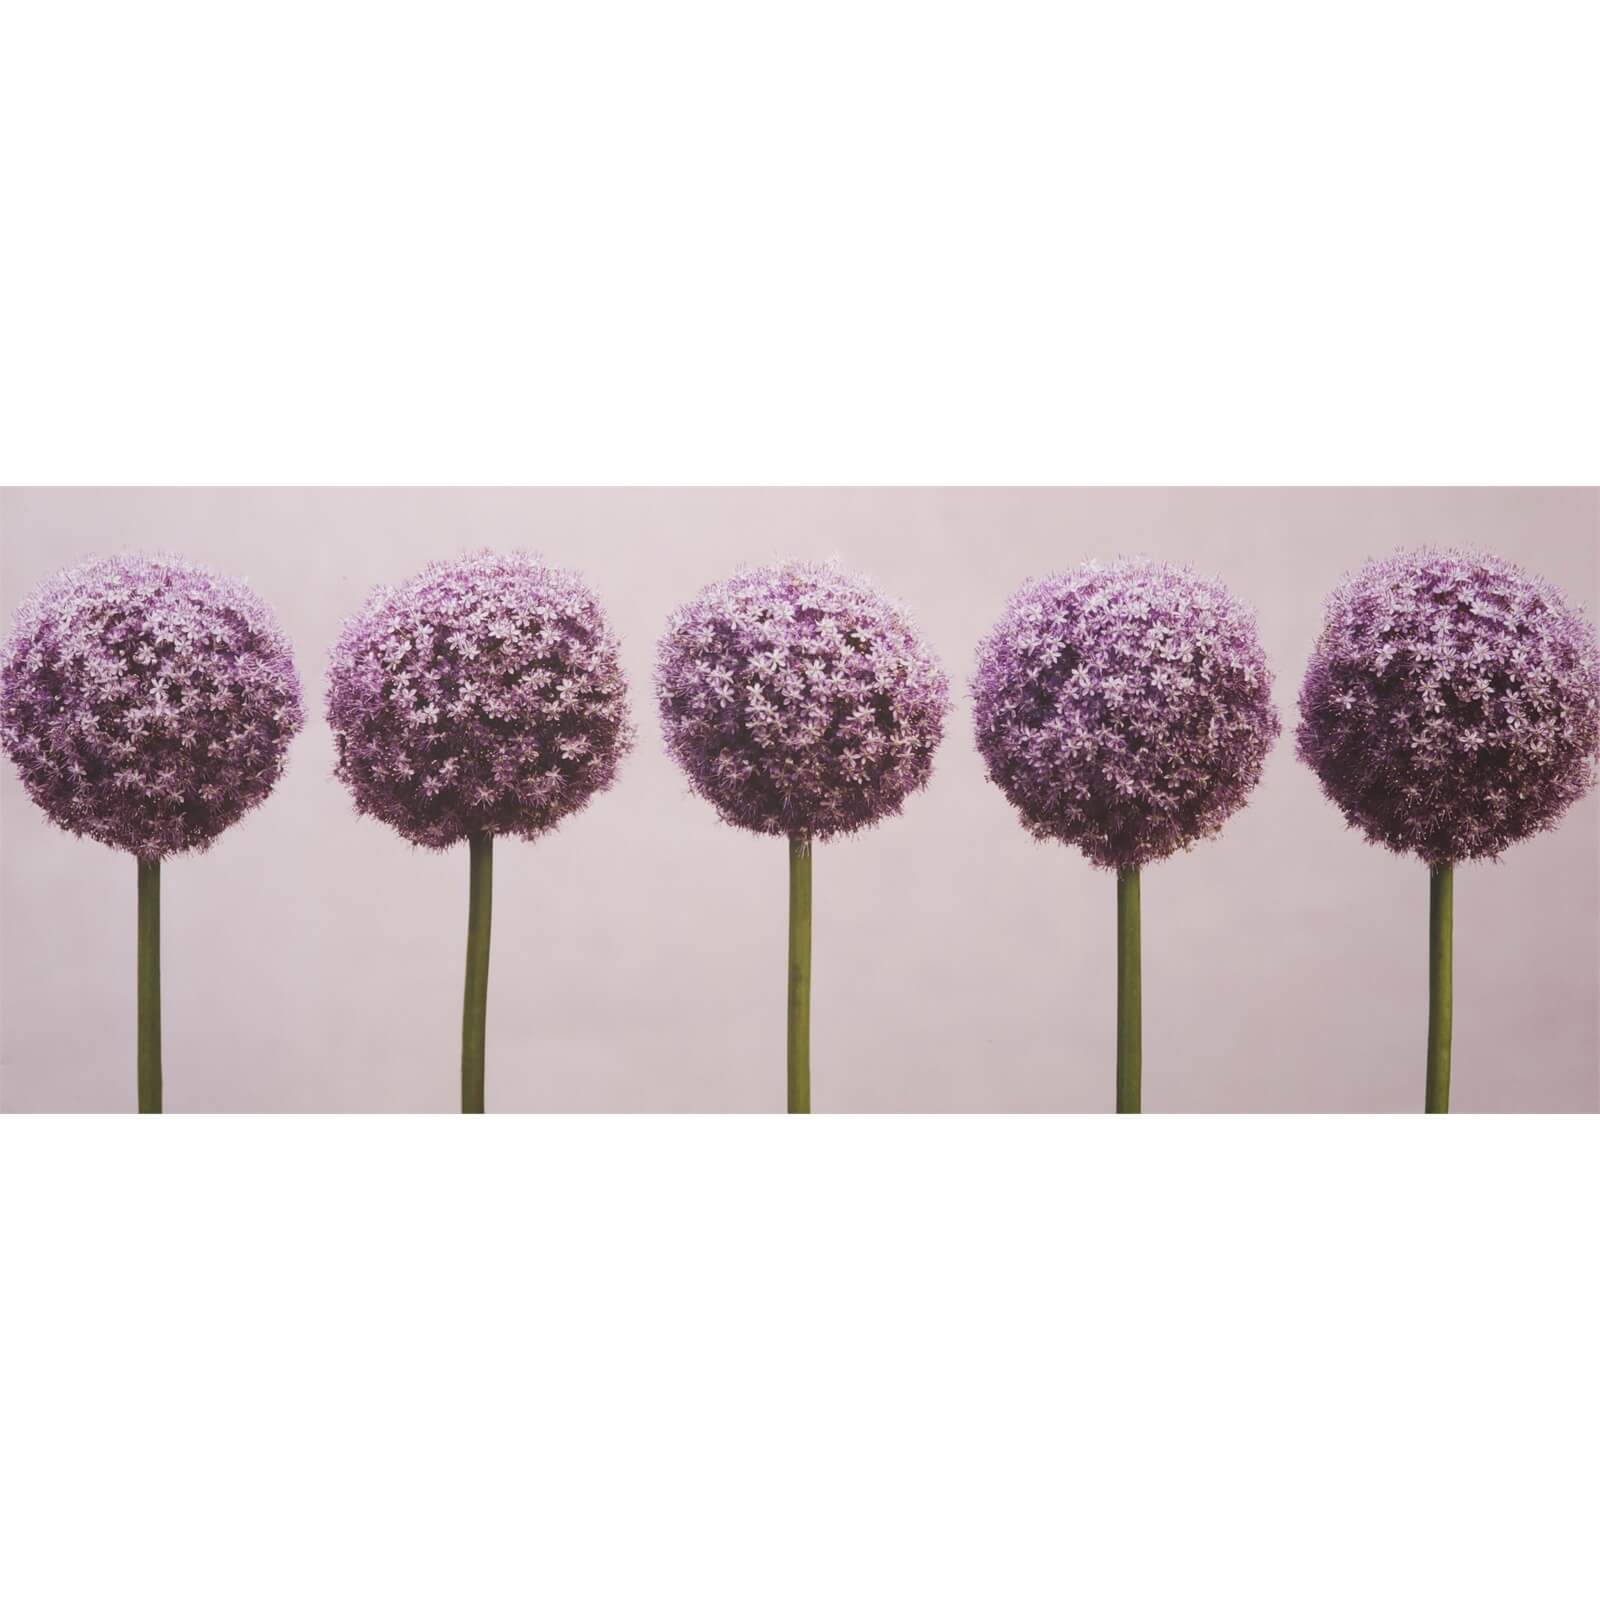 Row Of Alliums Canvas